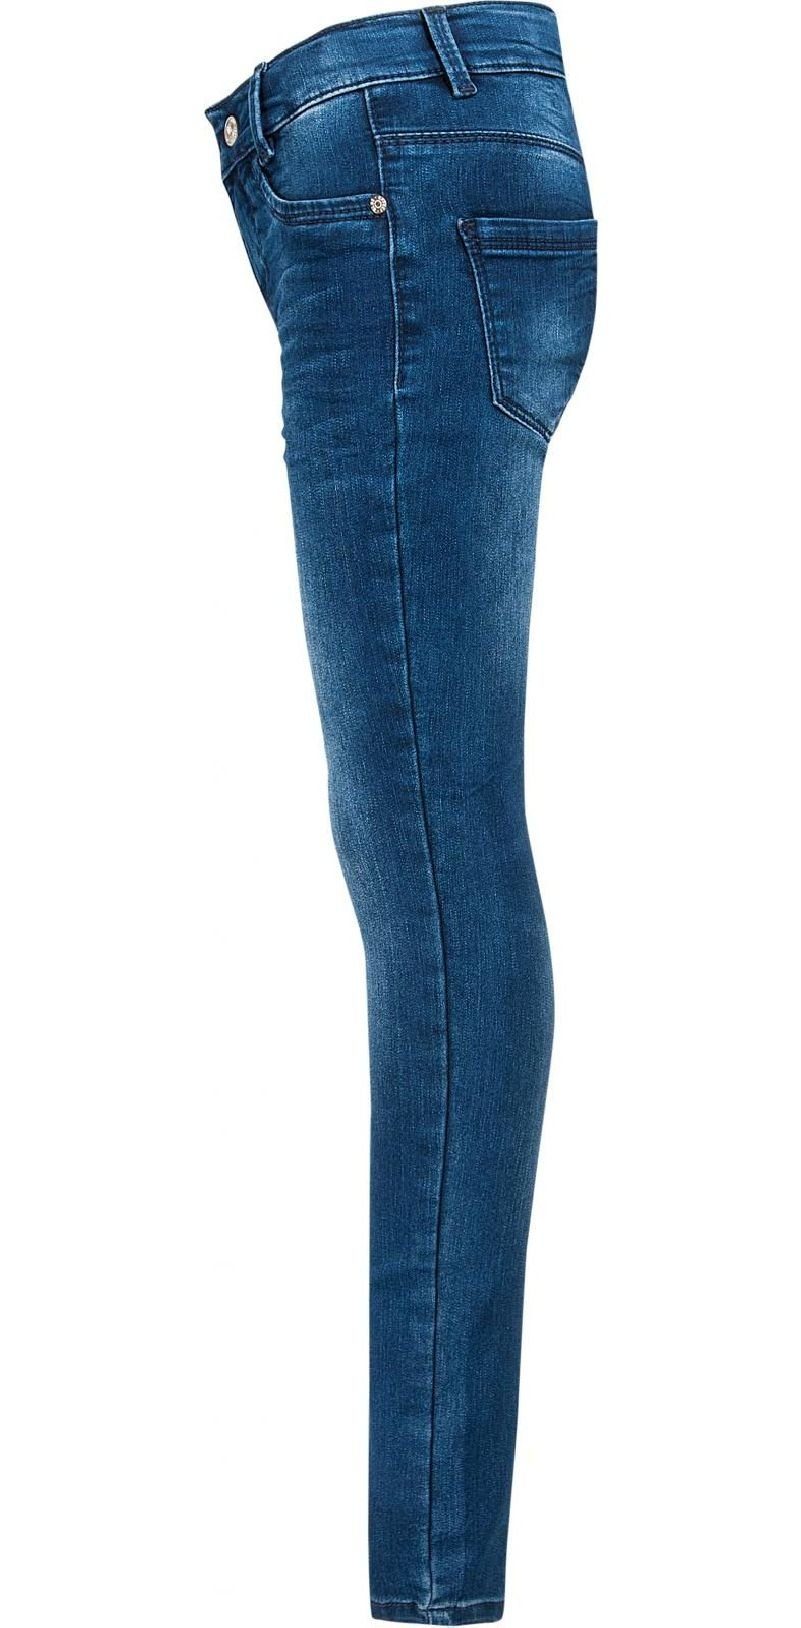 BLUE EFFECT Jeans denim Slim-fit-Jeans fit ultrastretch Skinny slim blue